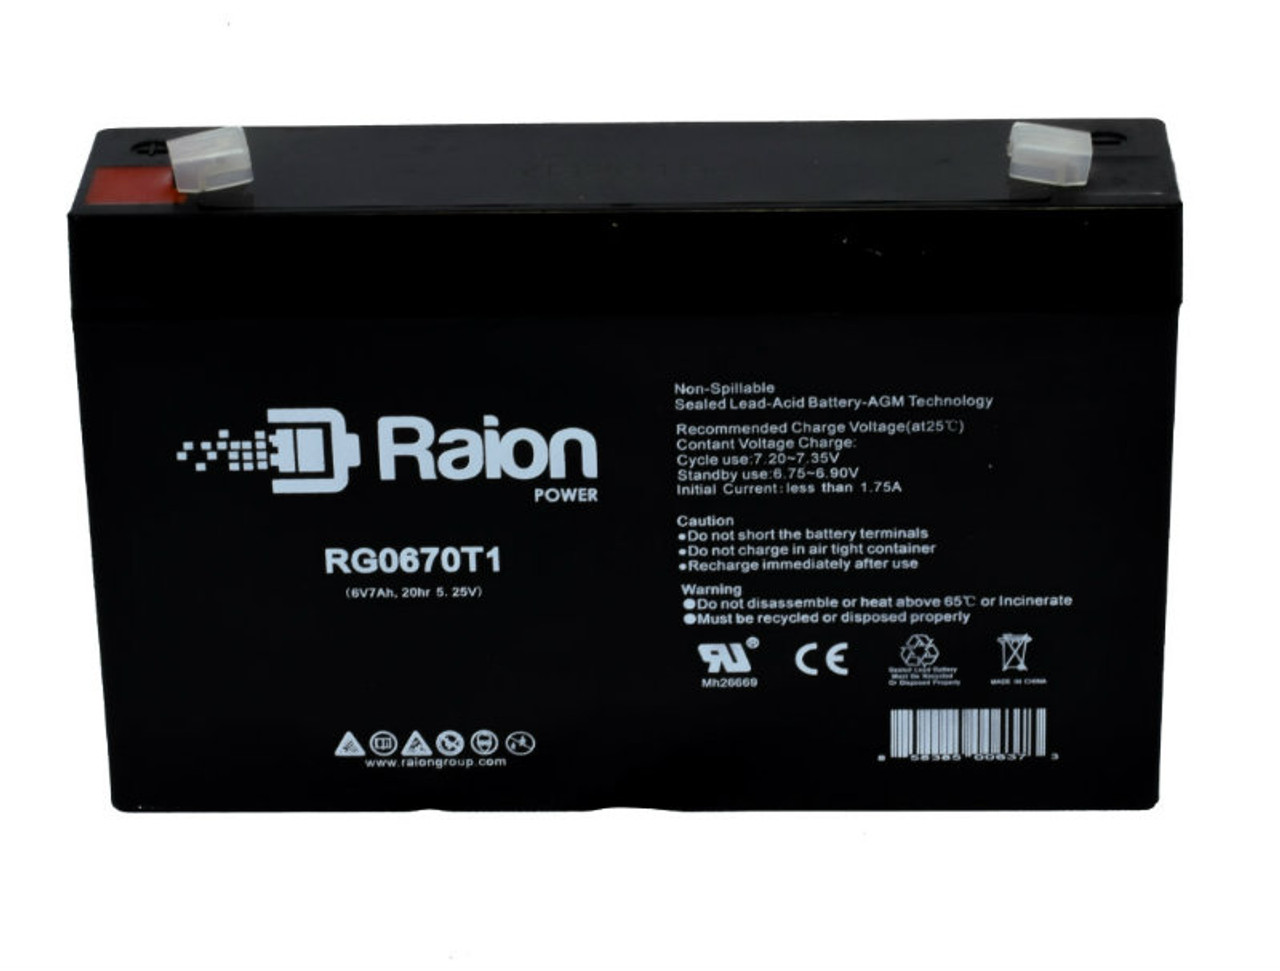 Raion Power RG0670T1 Replacement Battery Cartridge for Emergi-Lite 12M9